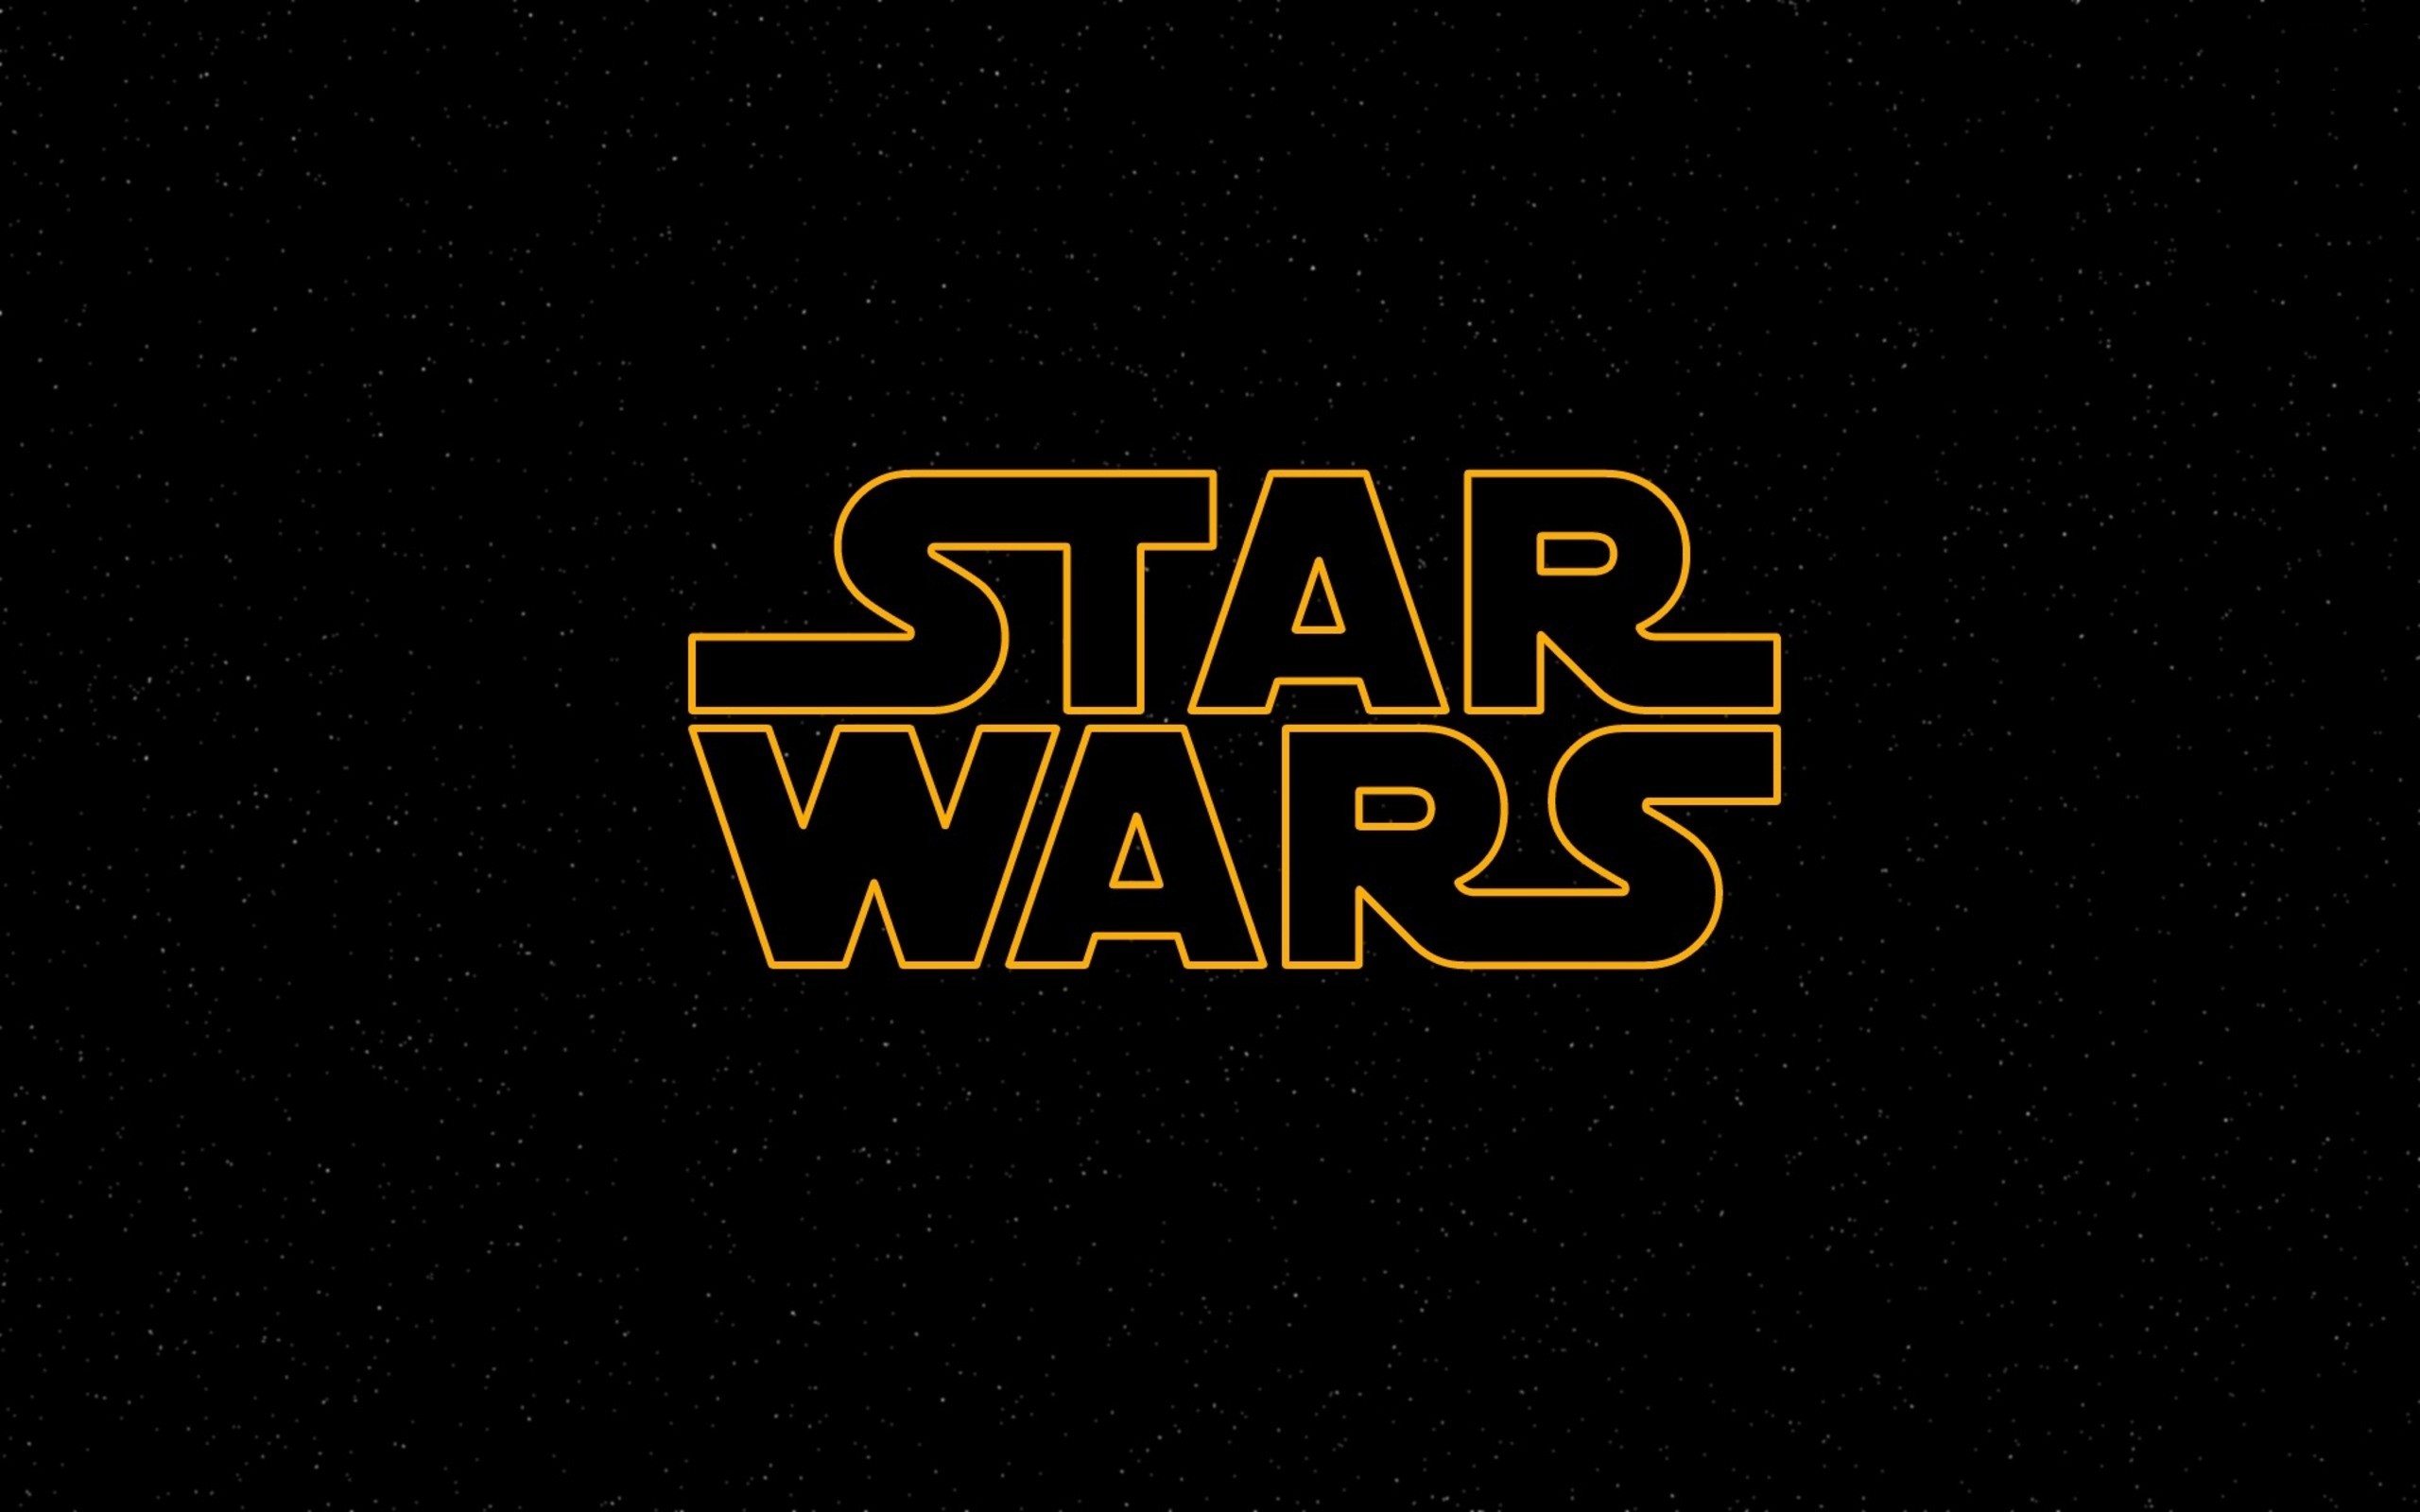 Star Wars logos black background wallpaper 2560x1600 205430